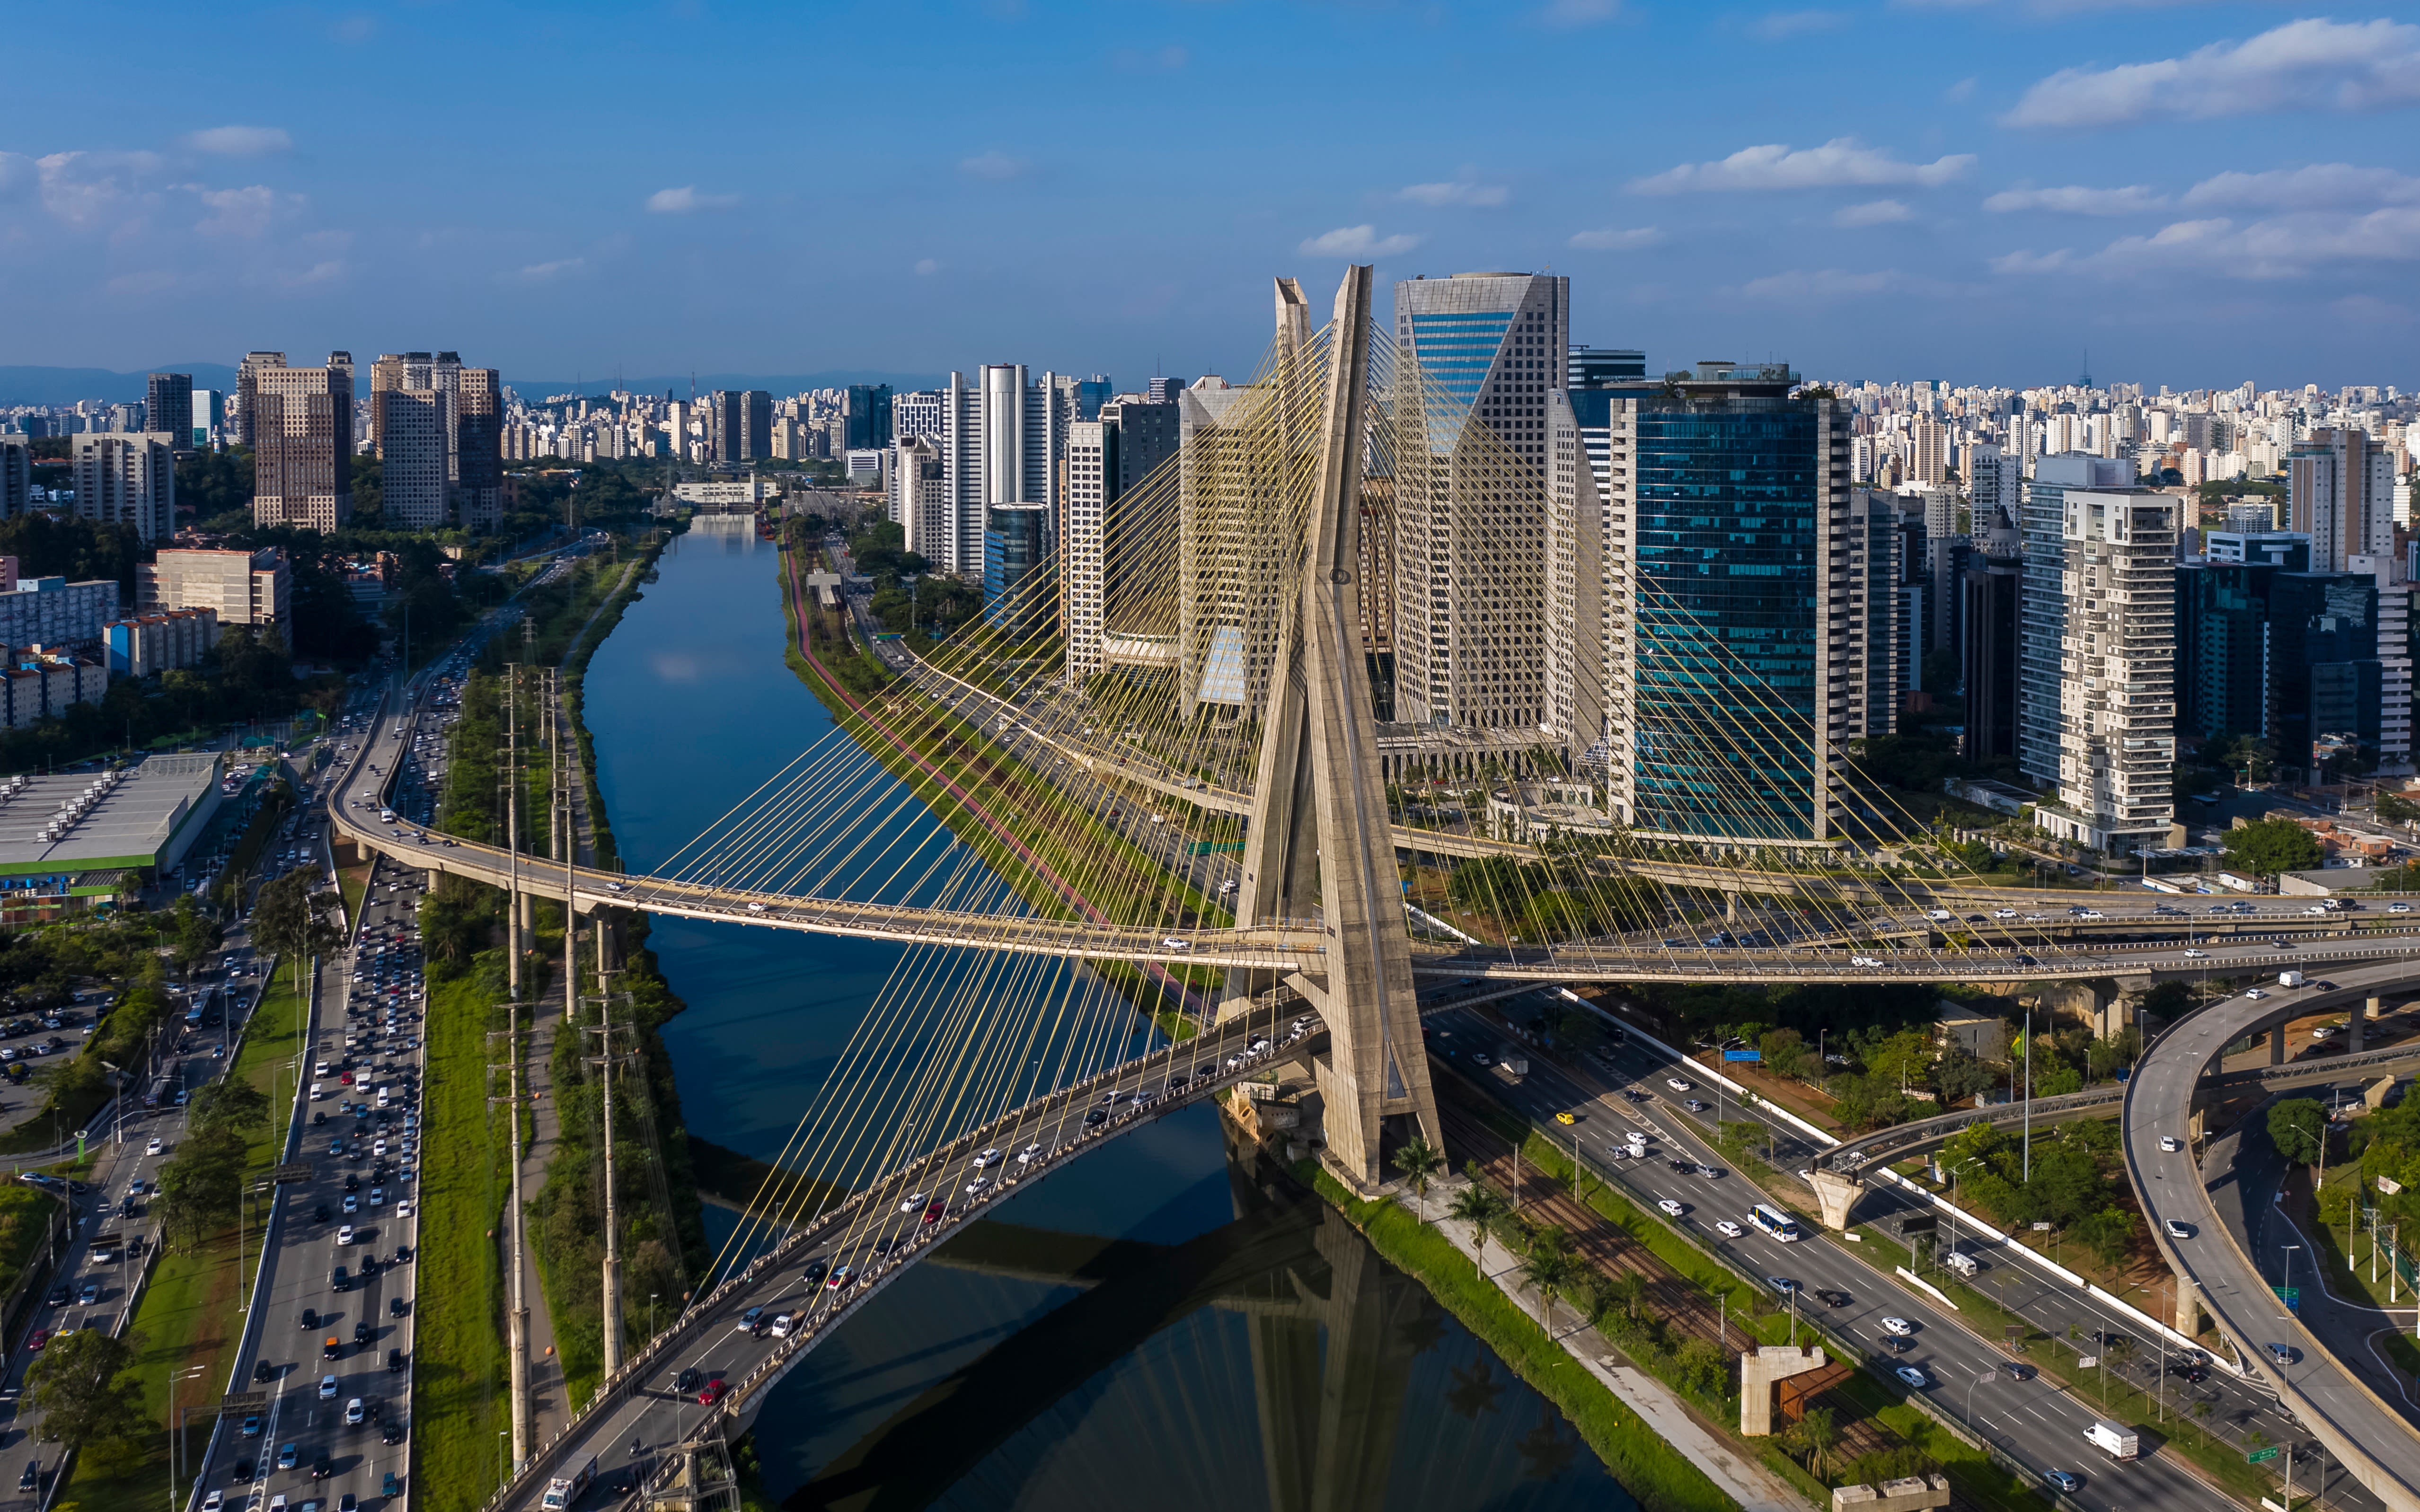 An aerial image of São Paulo